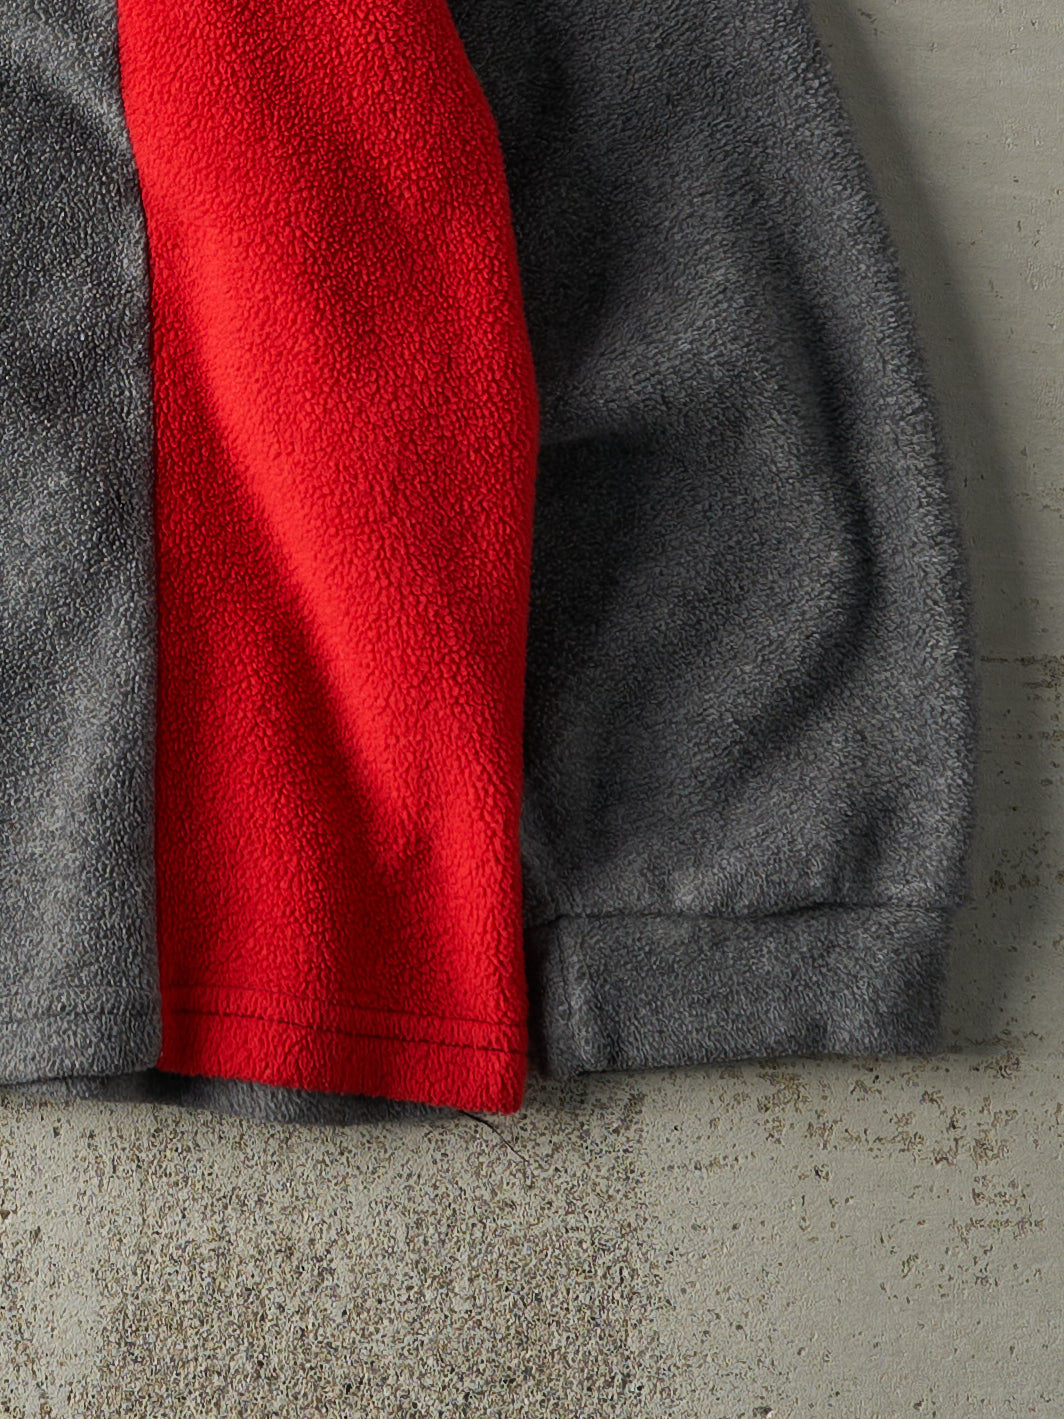 Vintage 90s Grey, Blue & Red Tommy Design Bootleg Fleece Quarter Zip (L/XL)